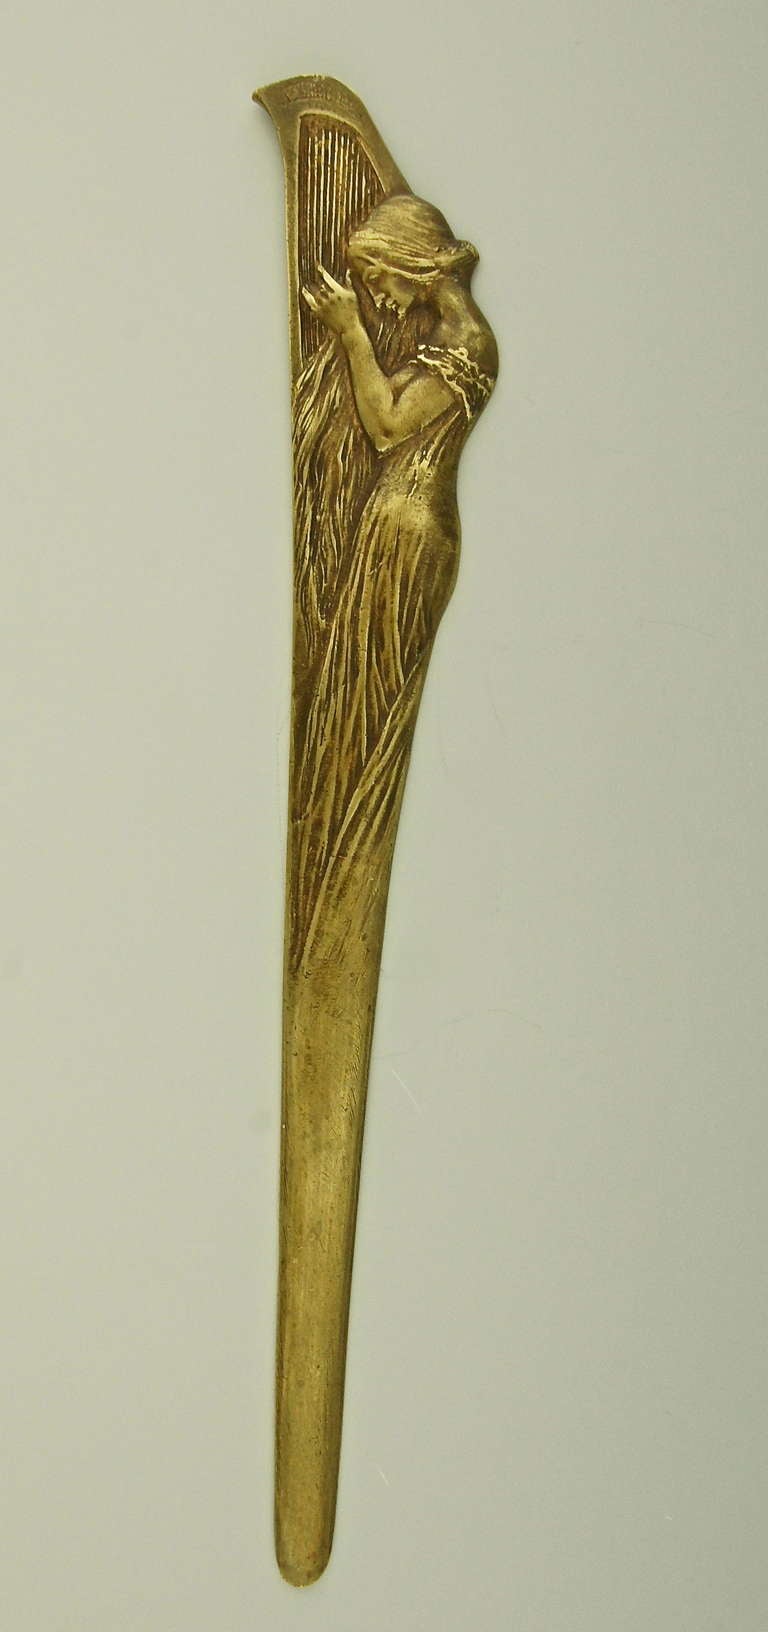 A letter bronze opener with Art Nouveau maiden playing a harp.  
Style:  Art Nouveau. 
Condition:  Good original condition.  
Date:  Ca.1900.
Material:  Patinated bronze.
Origin:  France. 
Size:  
L. 31.5 cm. x W 4.5 cm. 
L. 12.4 inch x W.